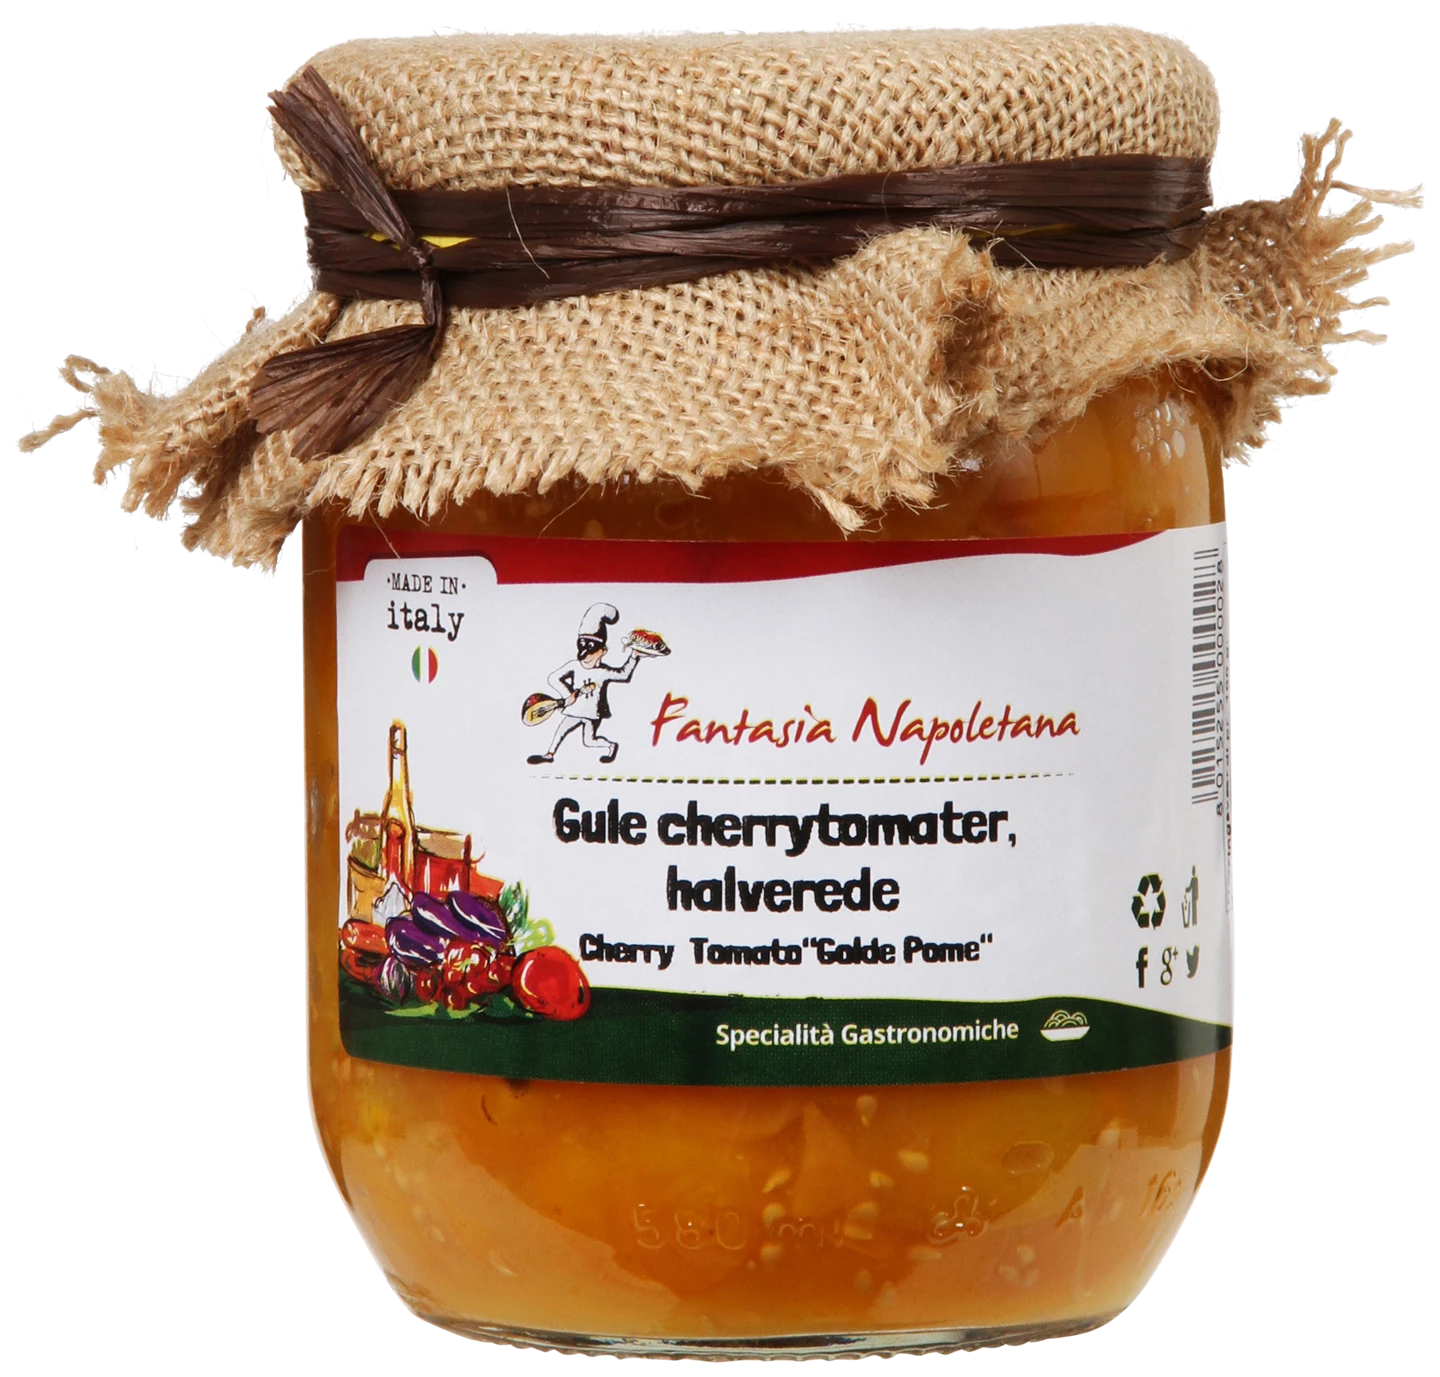 Løgismose delikatesser Fantasia Napolitana gule cherrytomater halverede - 214394